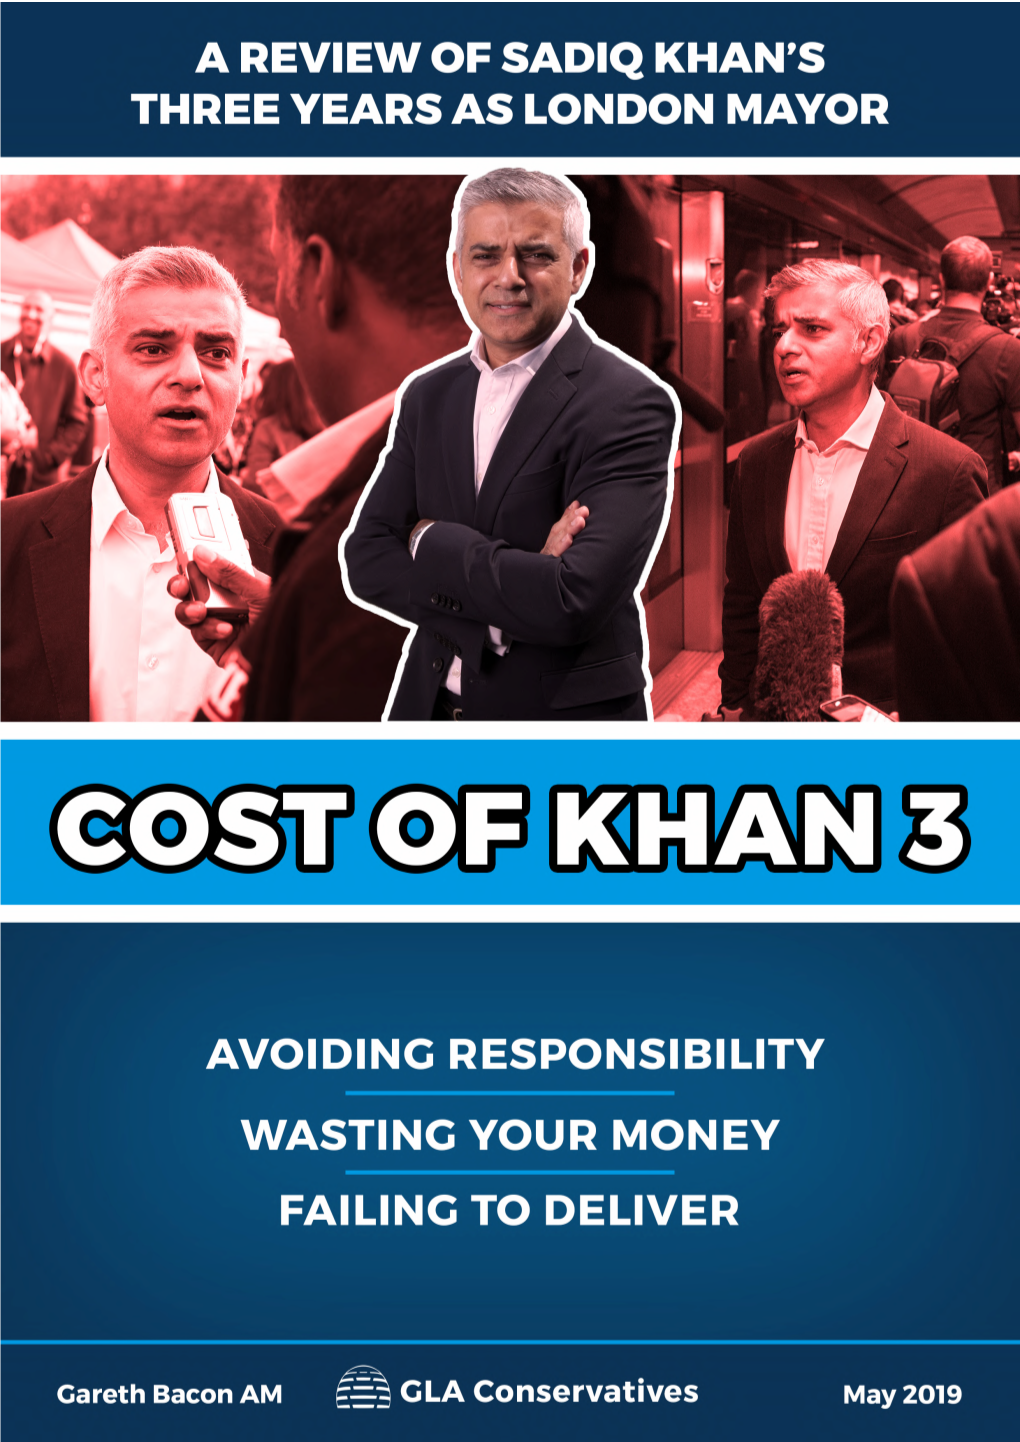 Cost of Khan 3